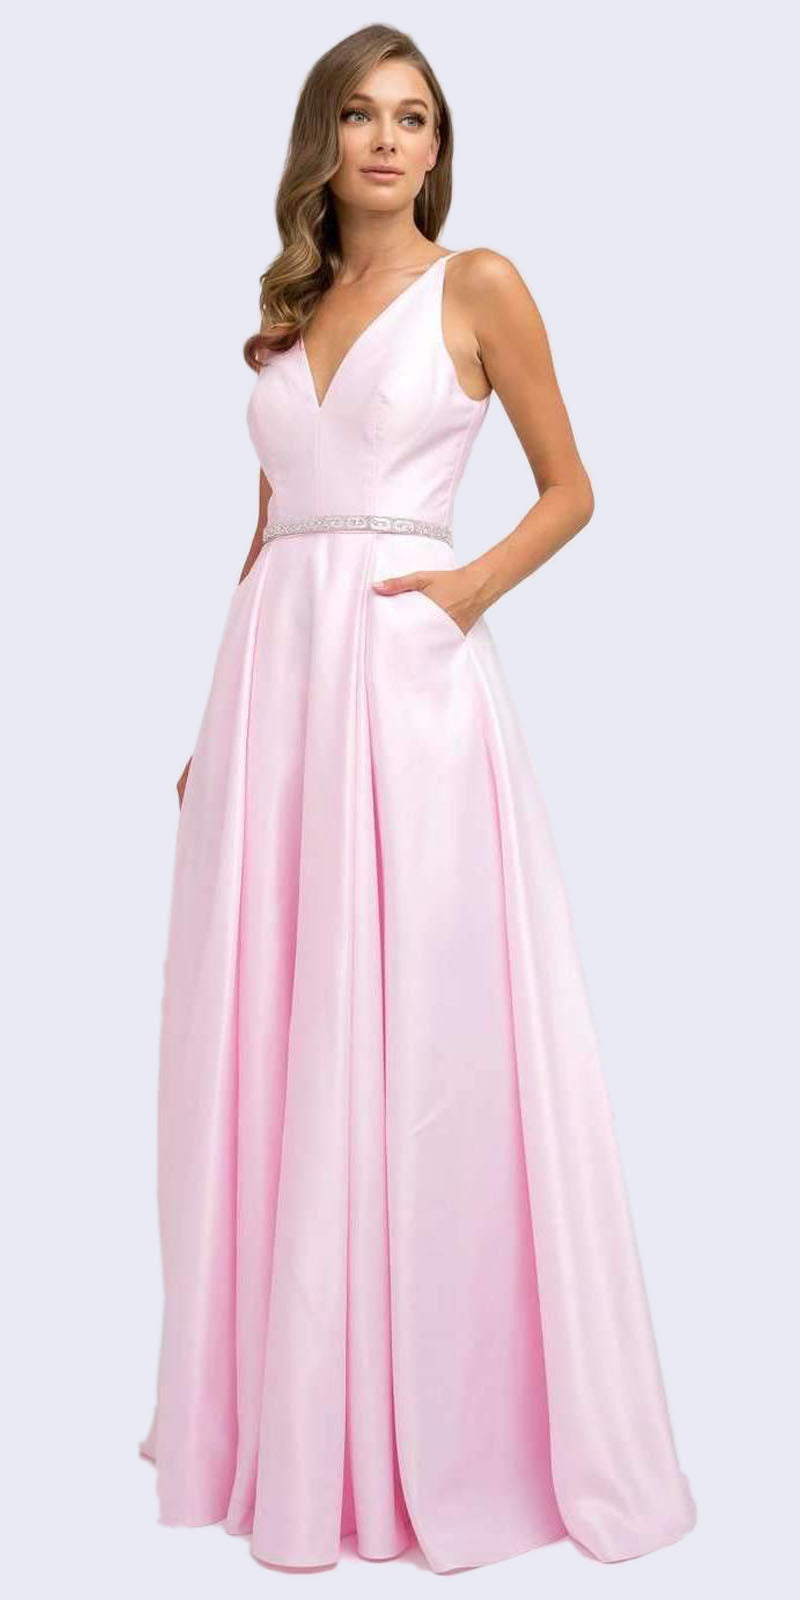 Juliet 696 Floor Length A-Line Light Pink Prom Dress Satin Removable Rhinestone Belt